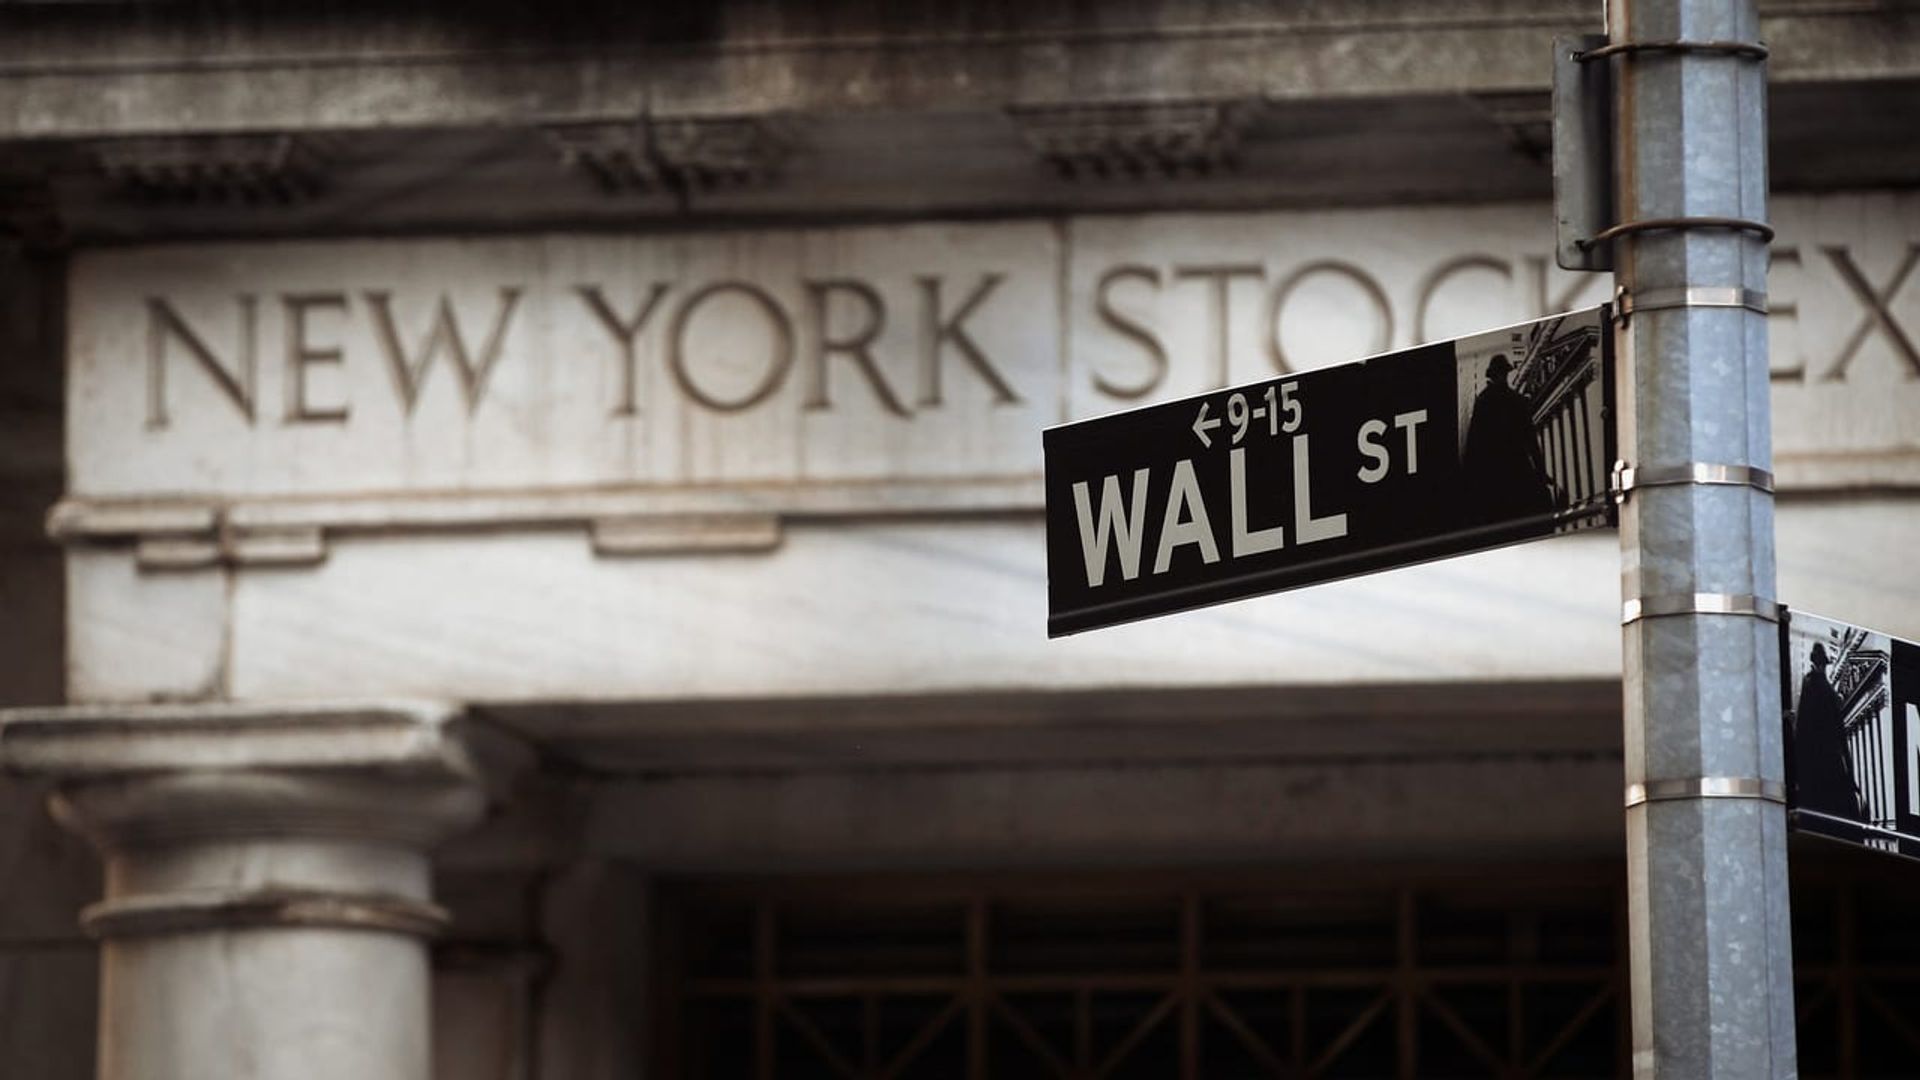 Wall Street Week background